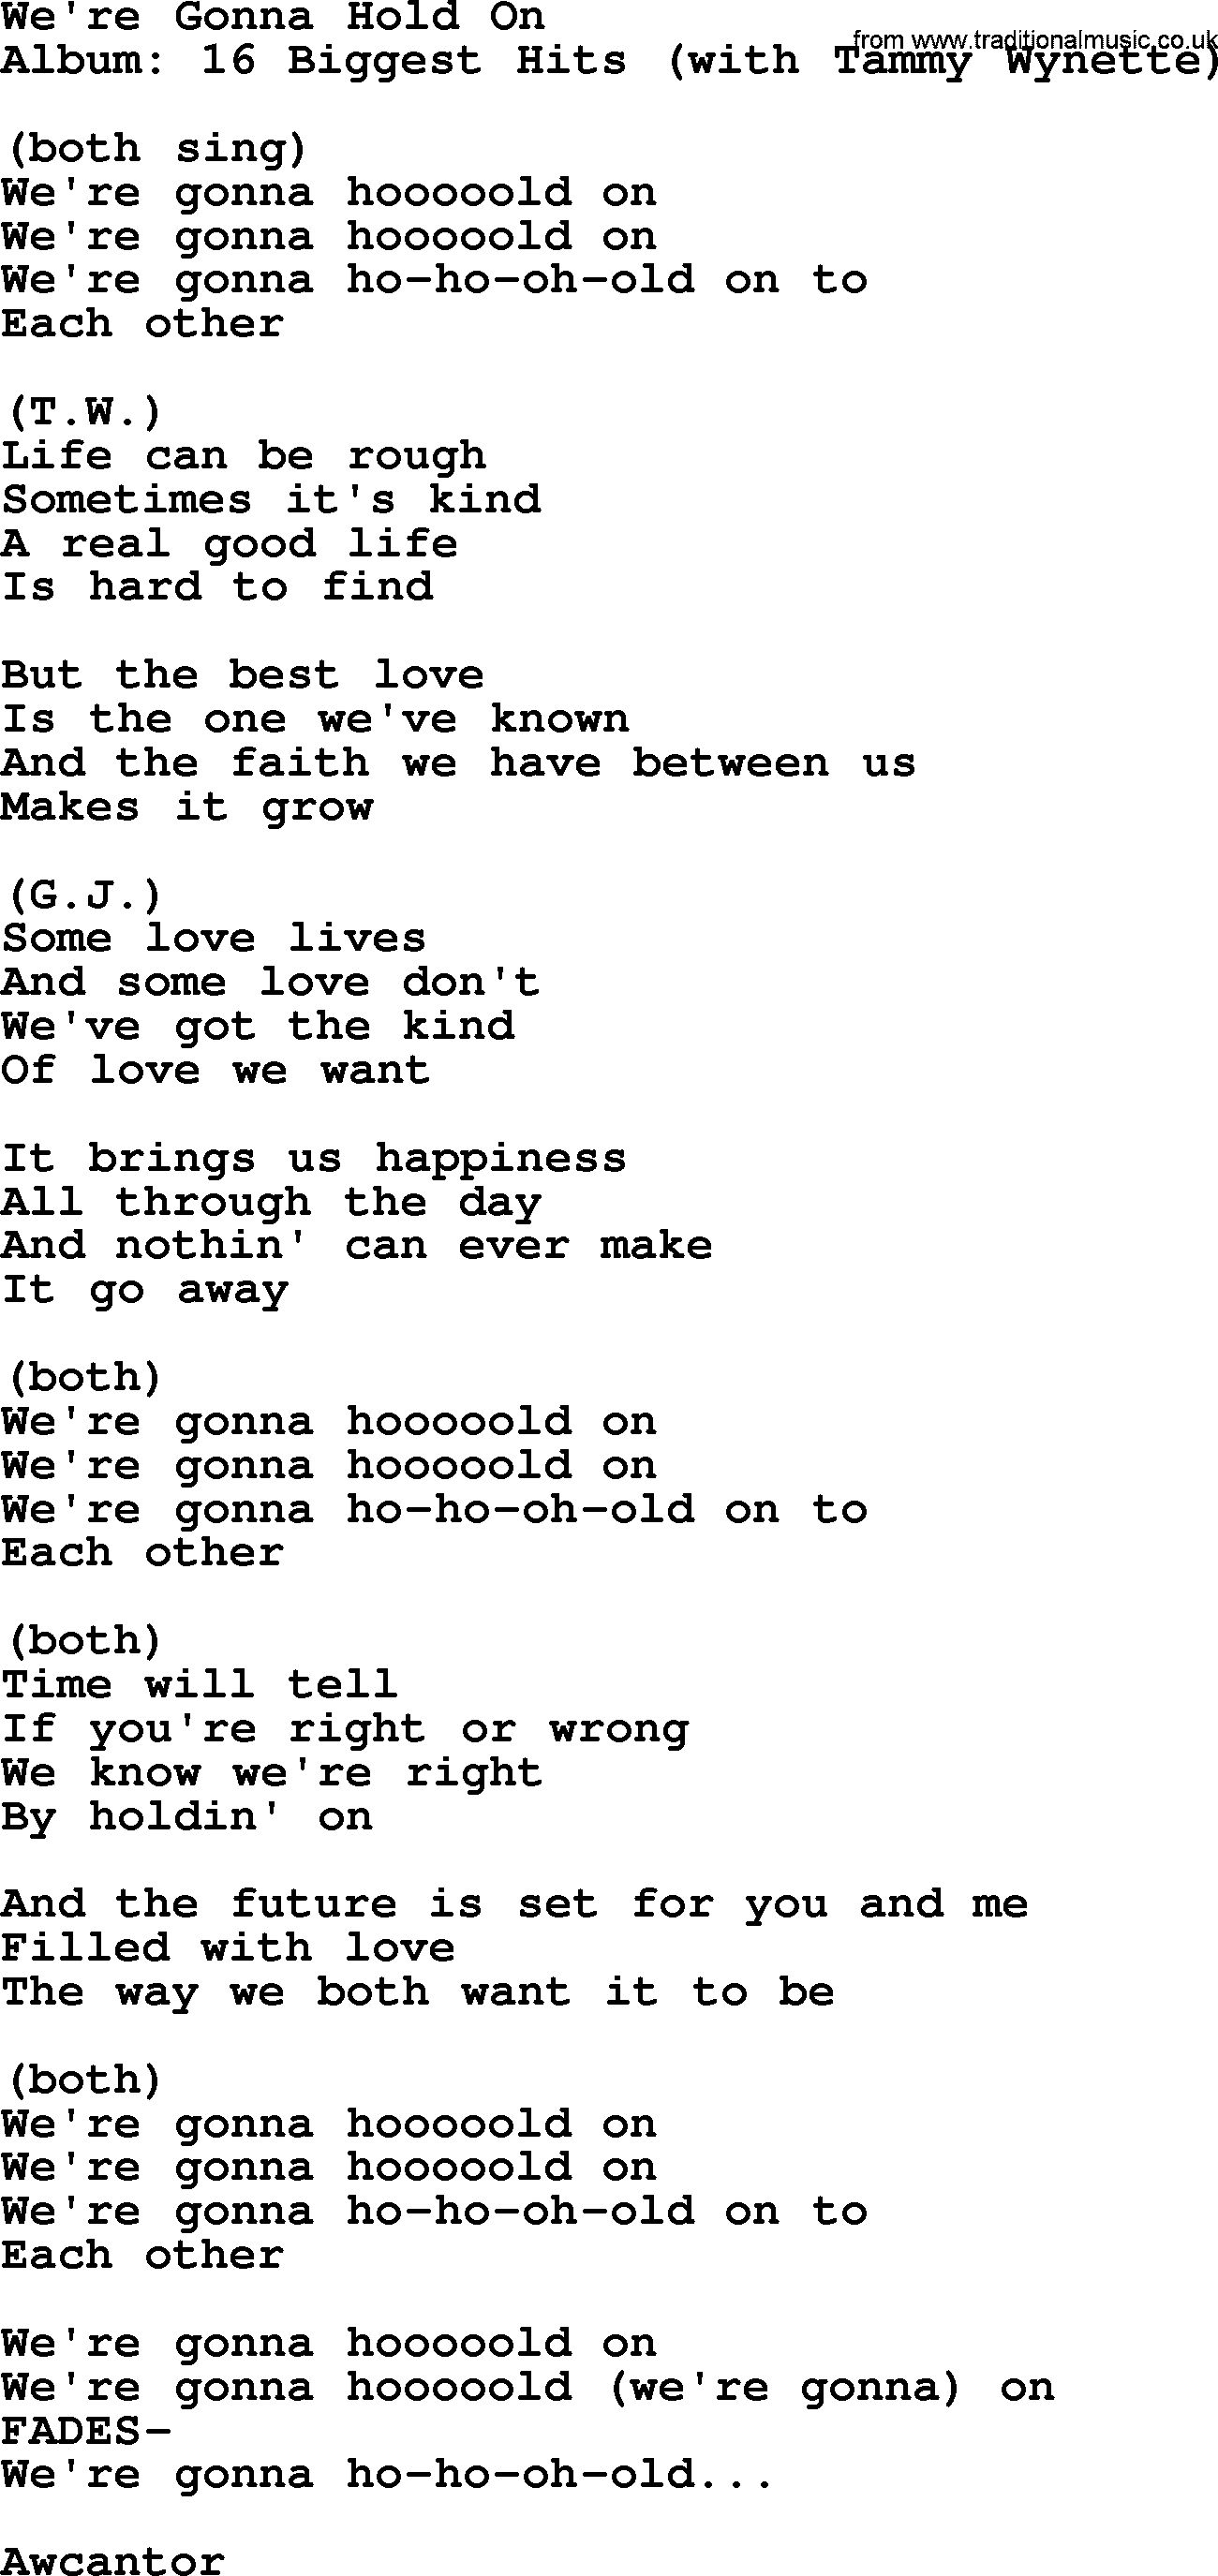 George Jones song: We're Gonna Hold On, lyrics